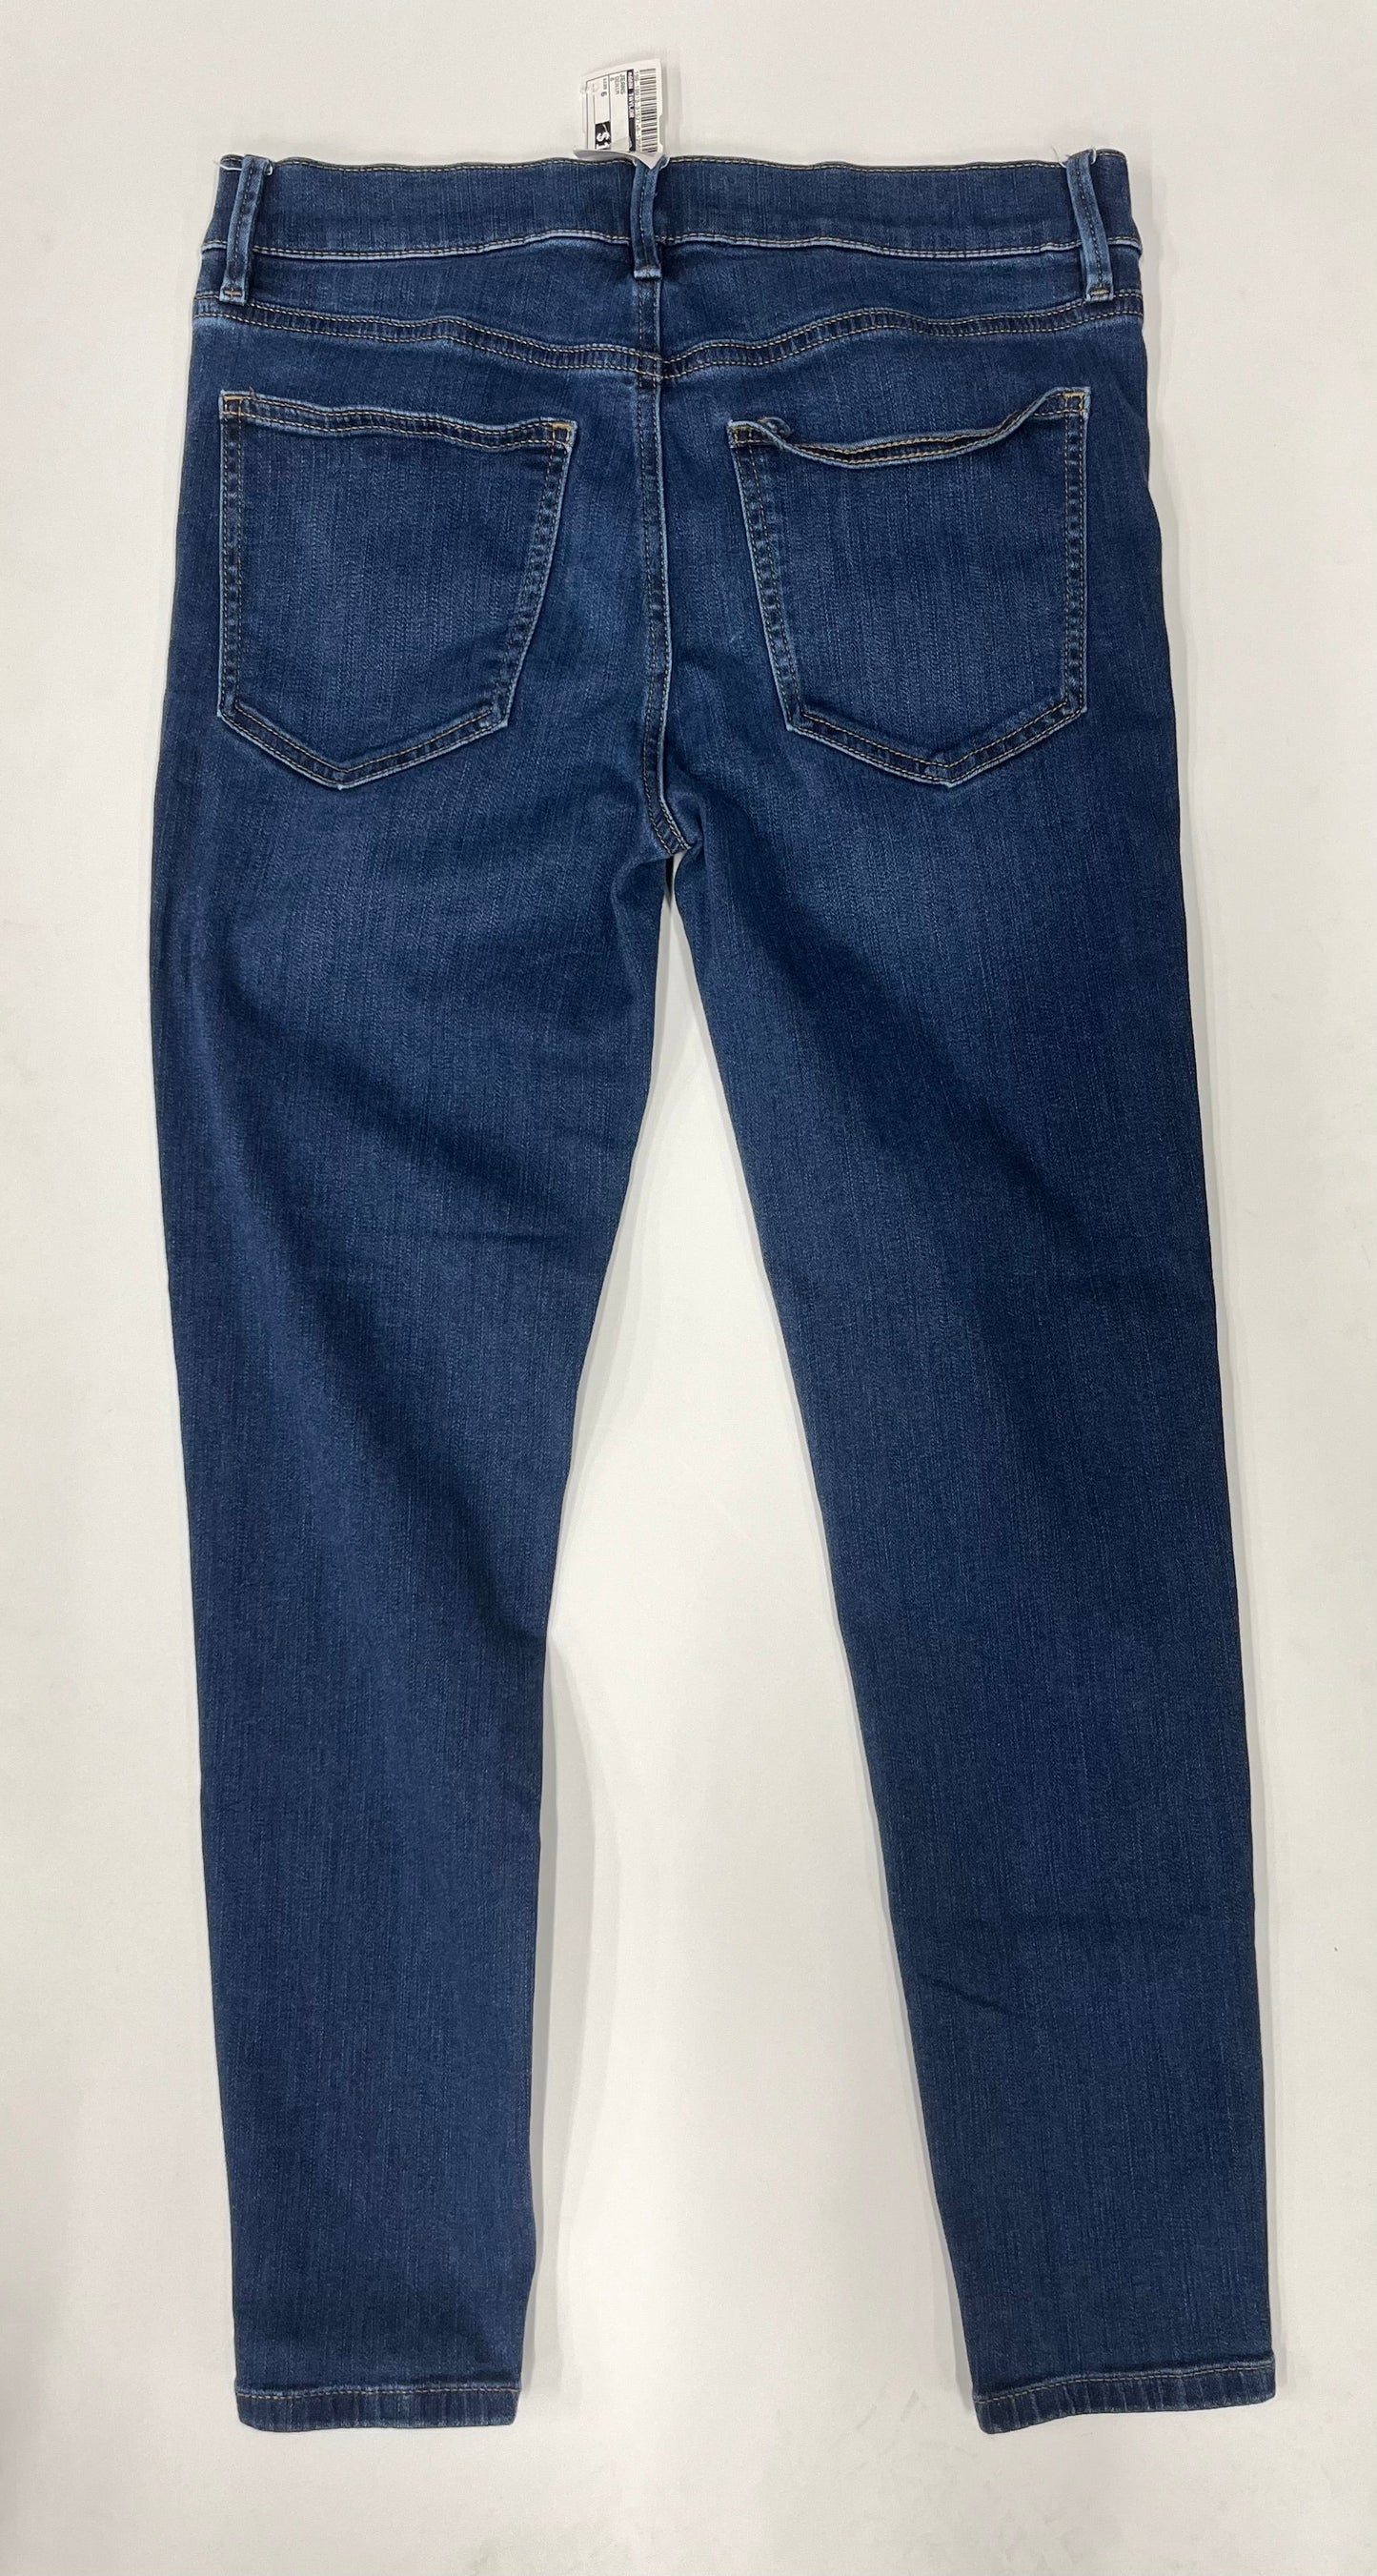 Jeans By Ann Taylor  Size: 6